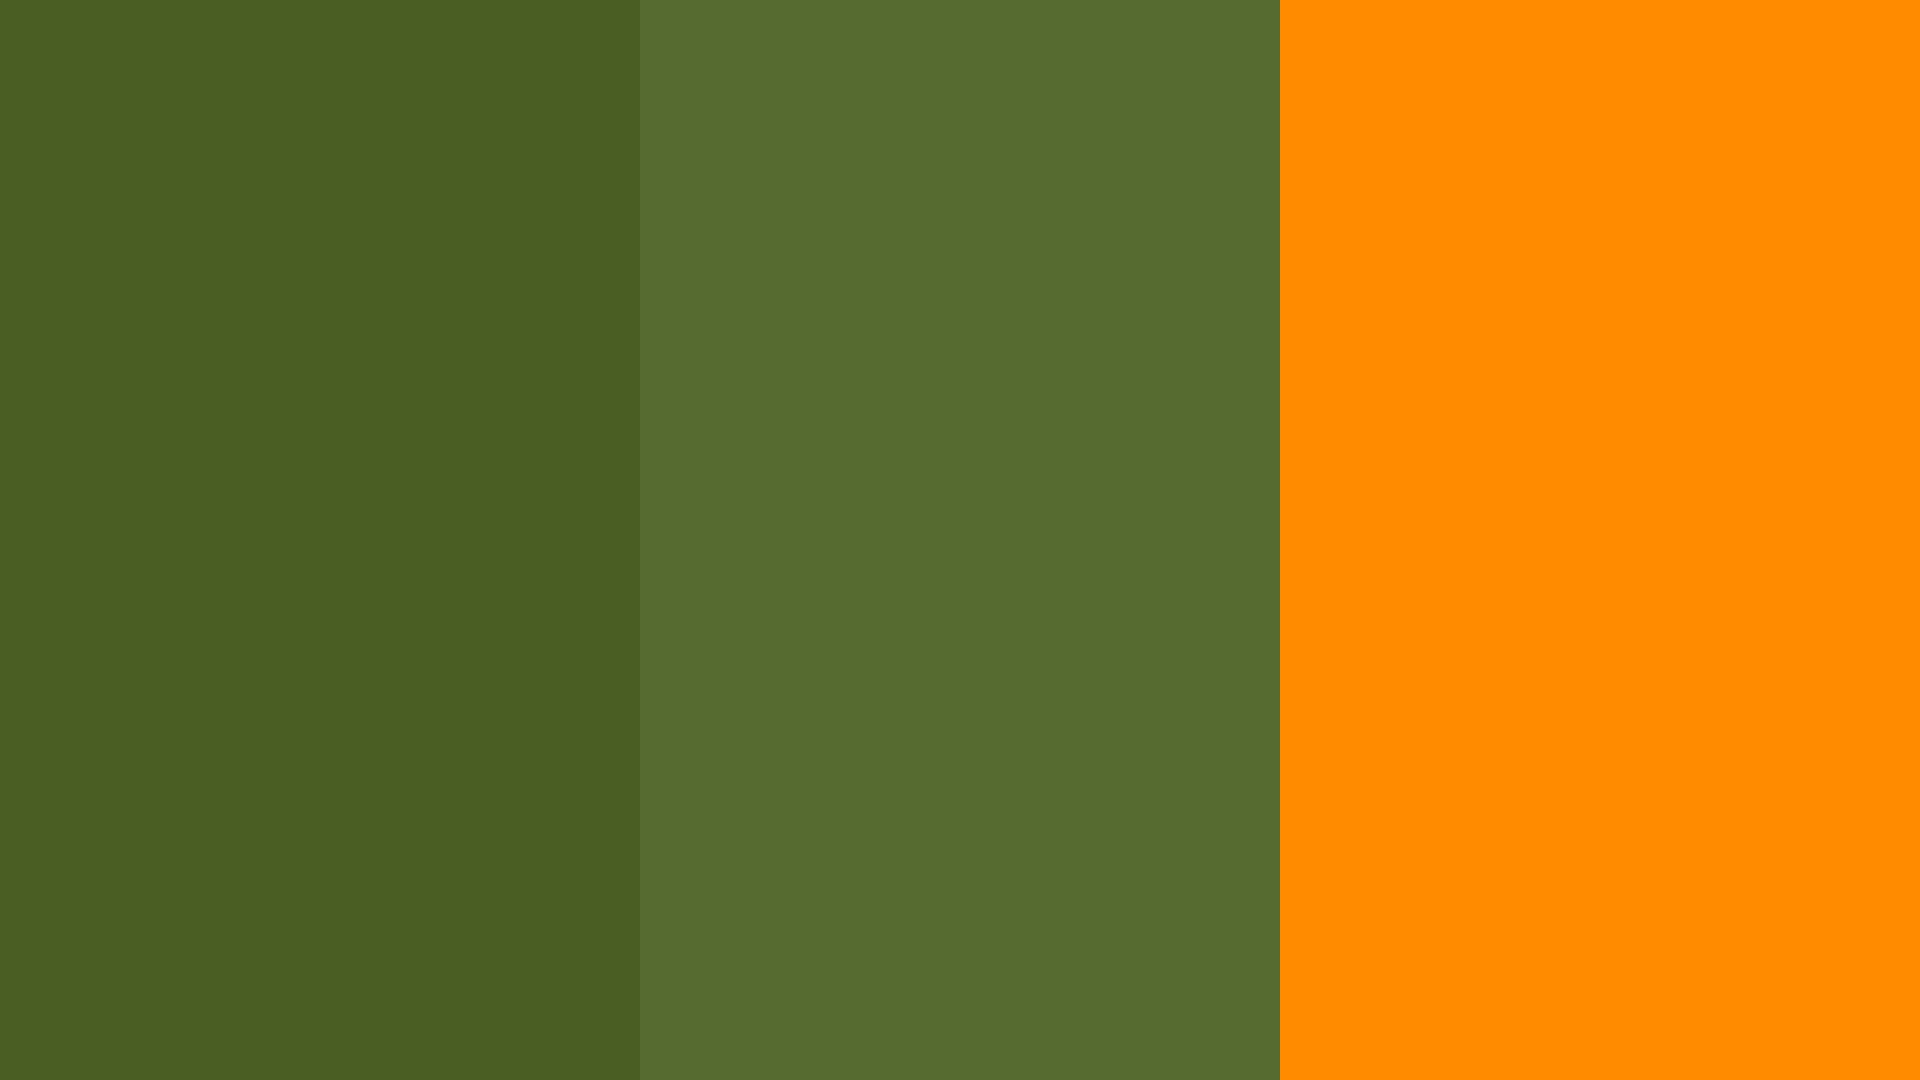 Dark Moss Green Olive Orange Three Color Background